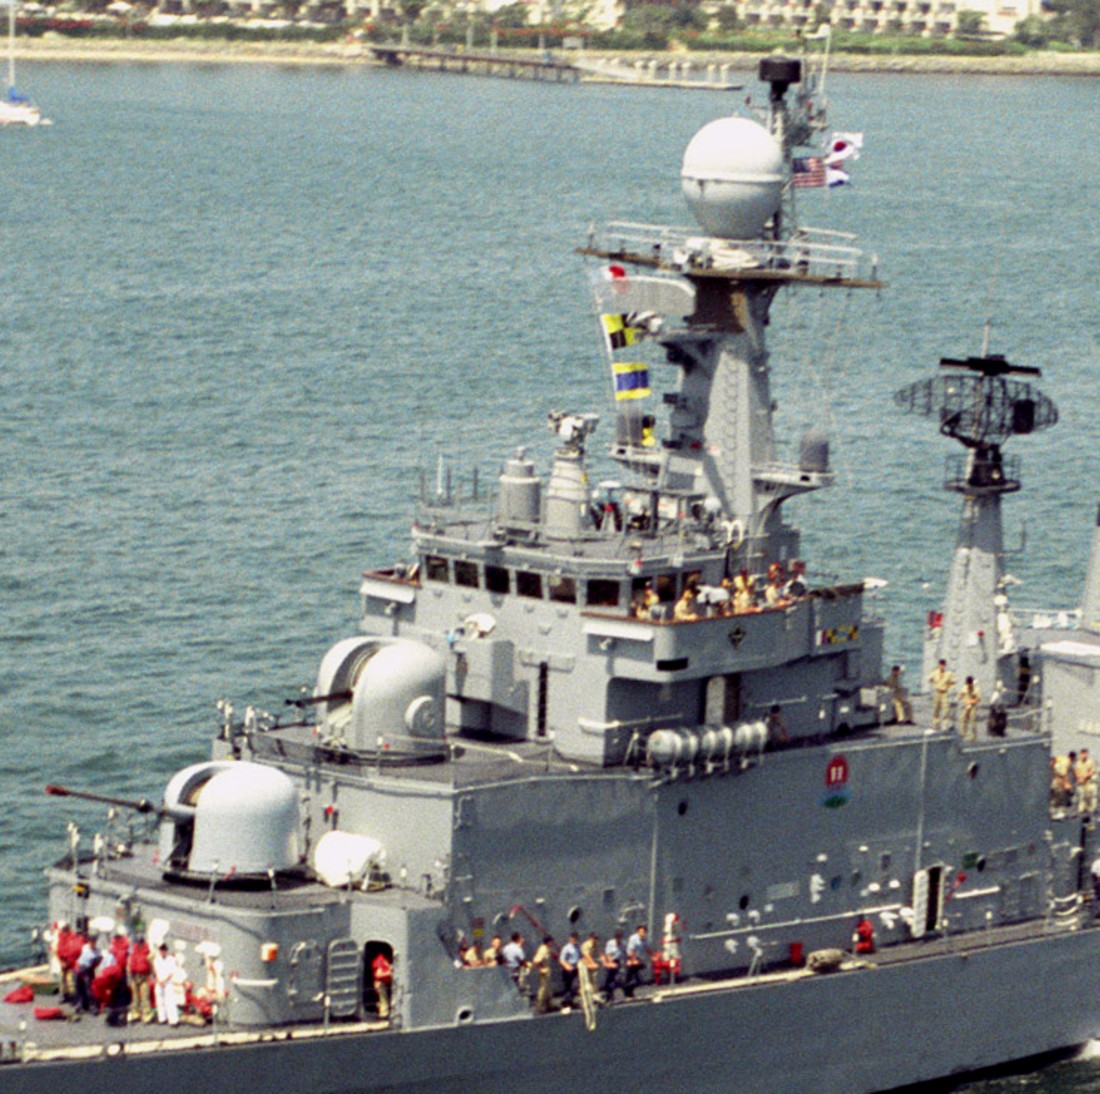 ff-956 roks gyeongbuk ulsan class frigate republic of korea navy rokn 05a oto-melara 76/62 gun 40l70 dardo ciws